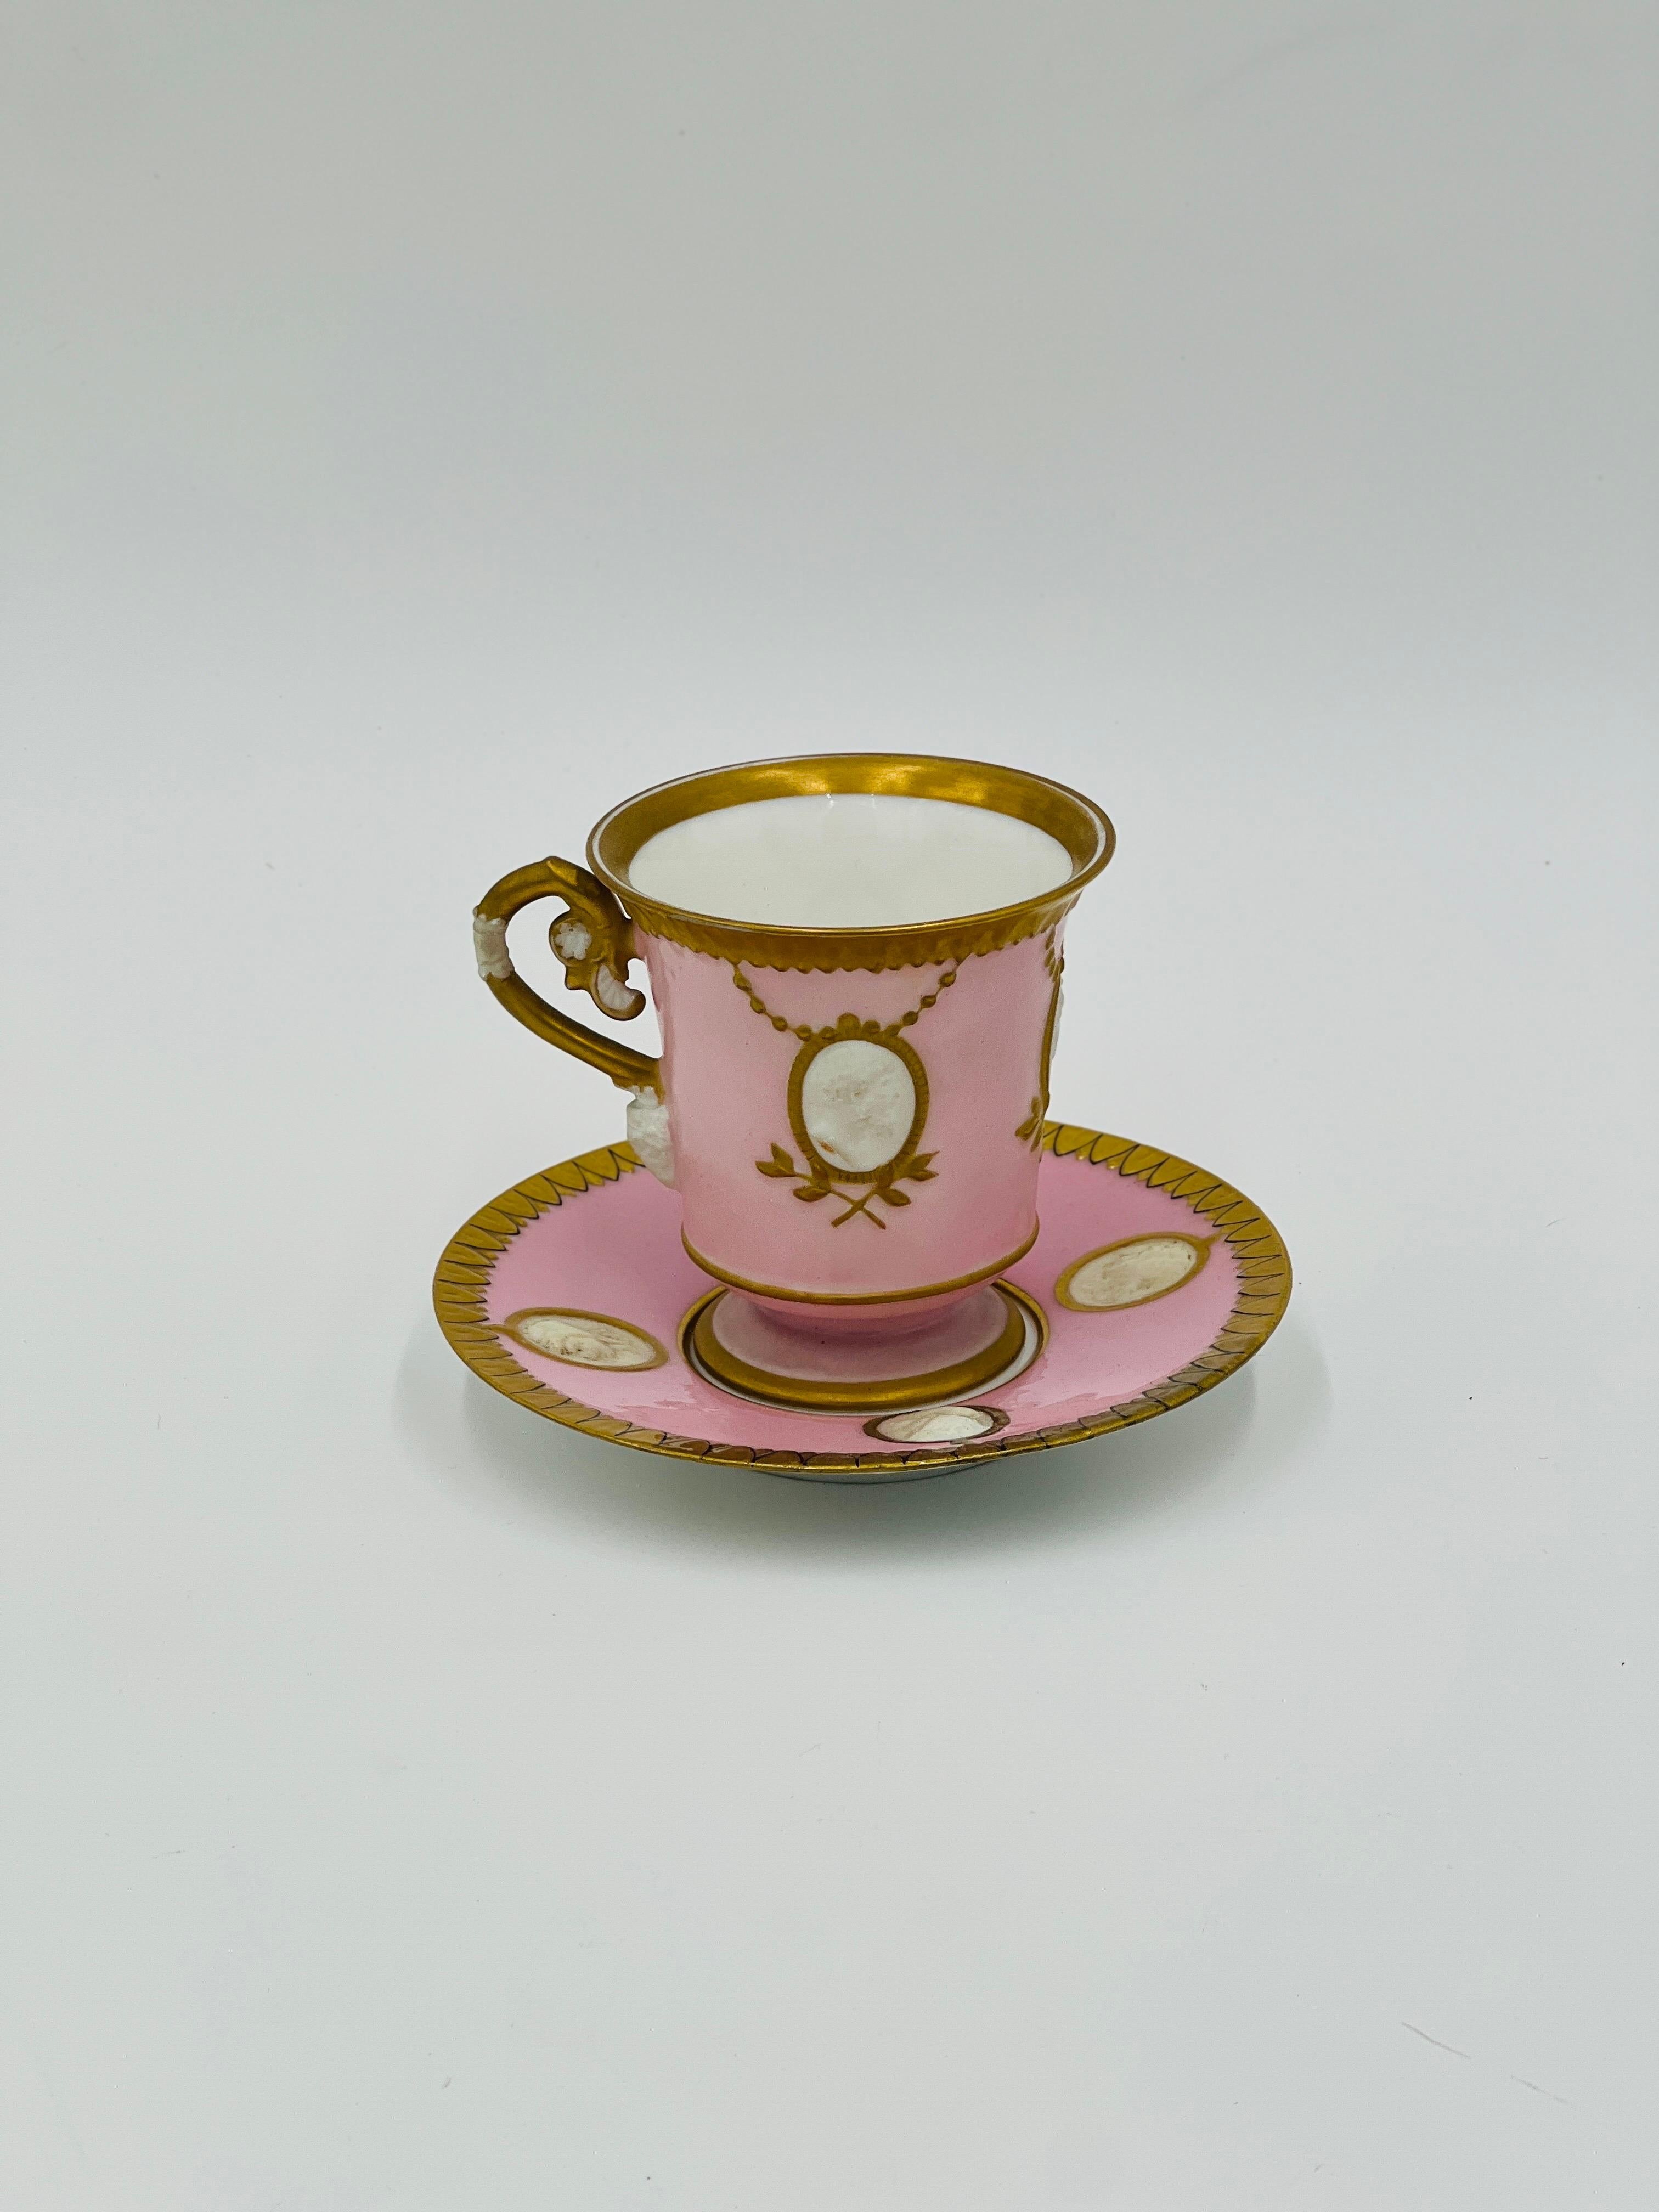 Porcelain Rare Old Paris Empire Style Classical Teacup & Saucer w/ Bisque Faces & Ram Head For Sale